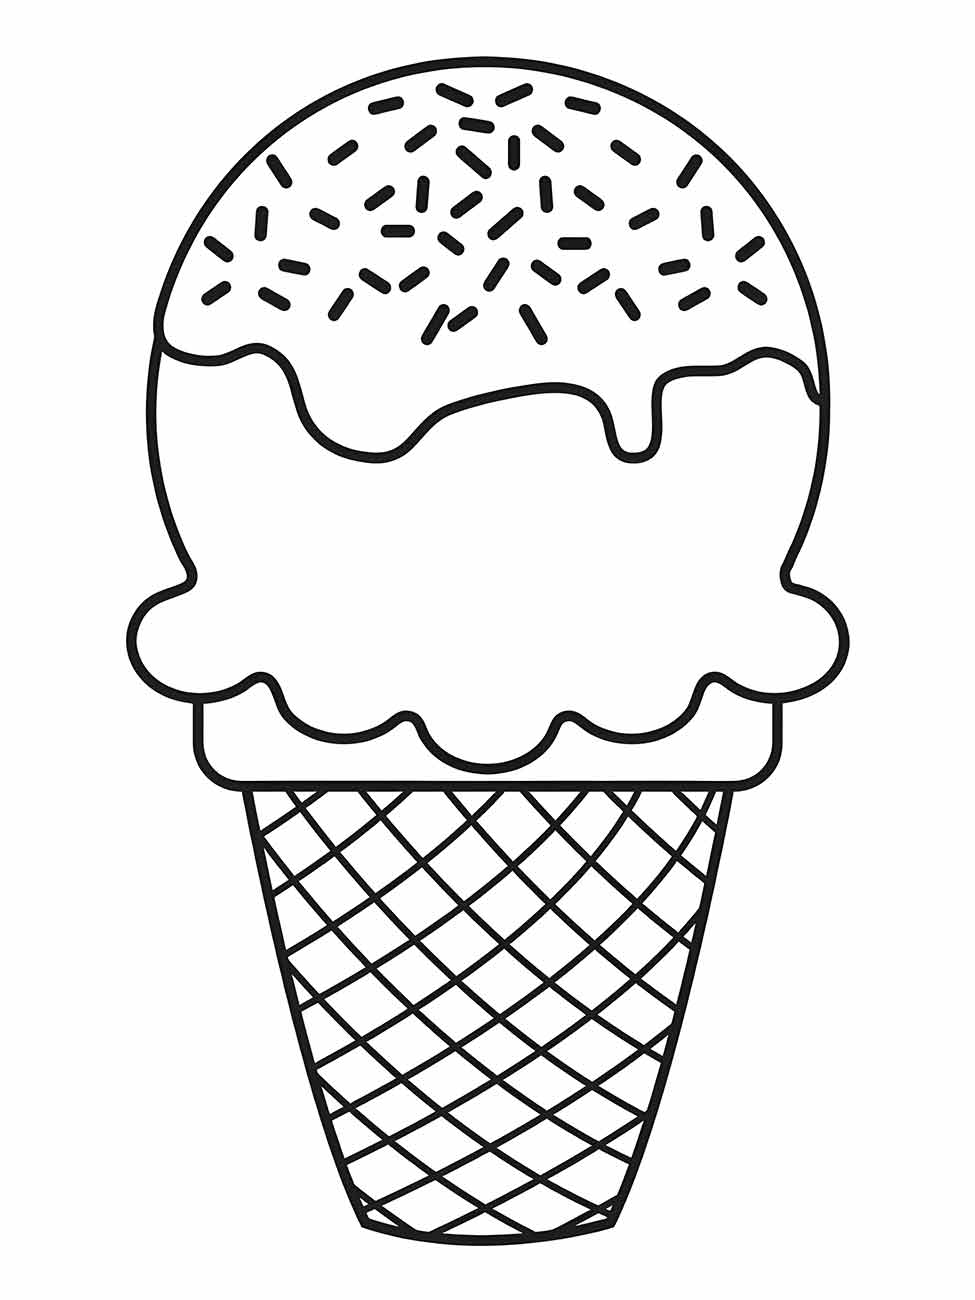 Desenhos para colorir de sorvete - doces e divertidos para